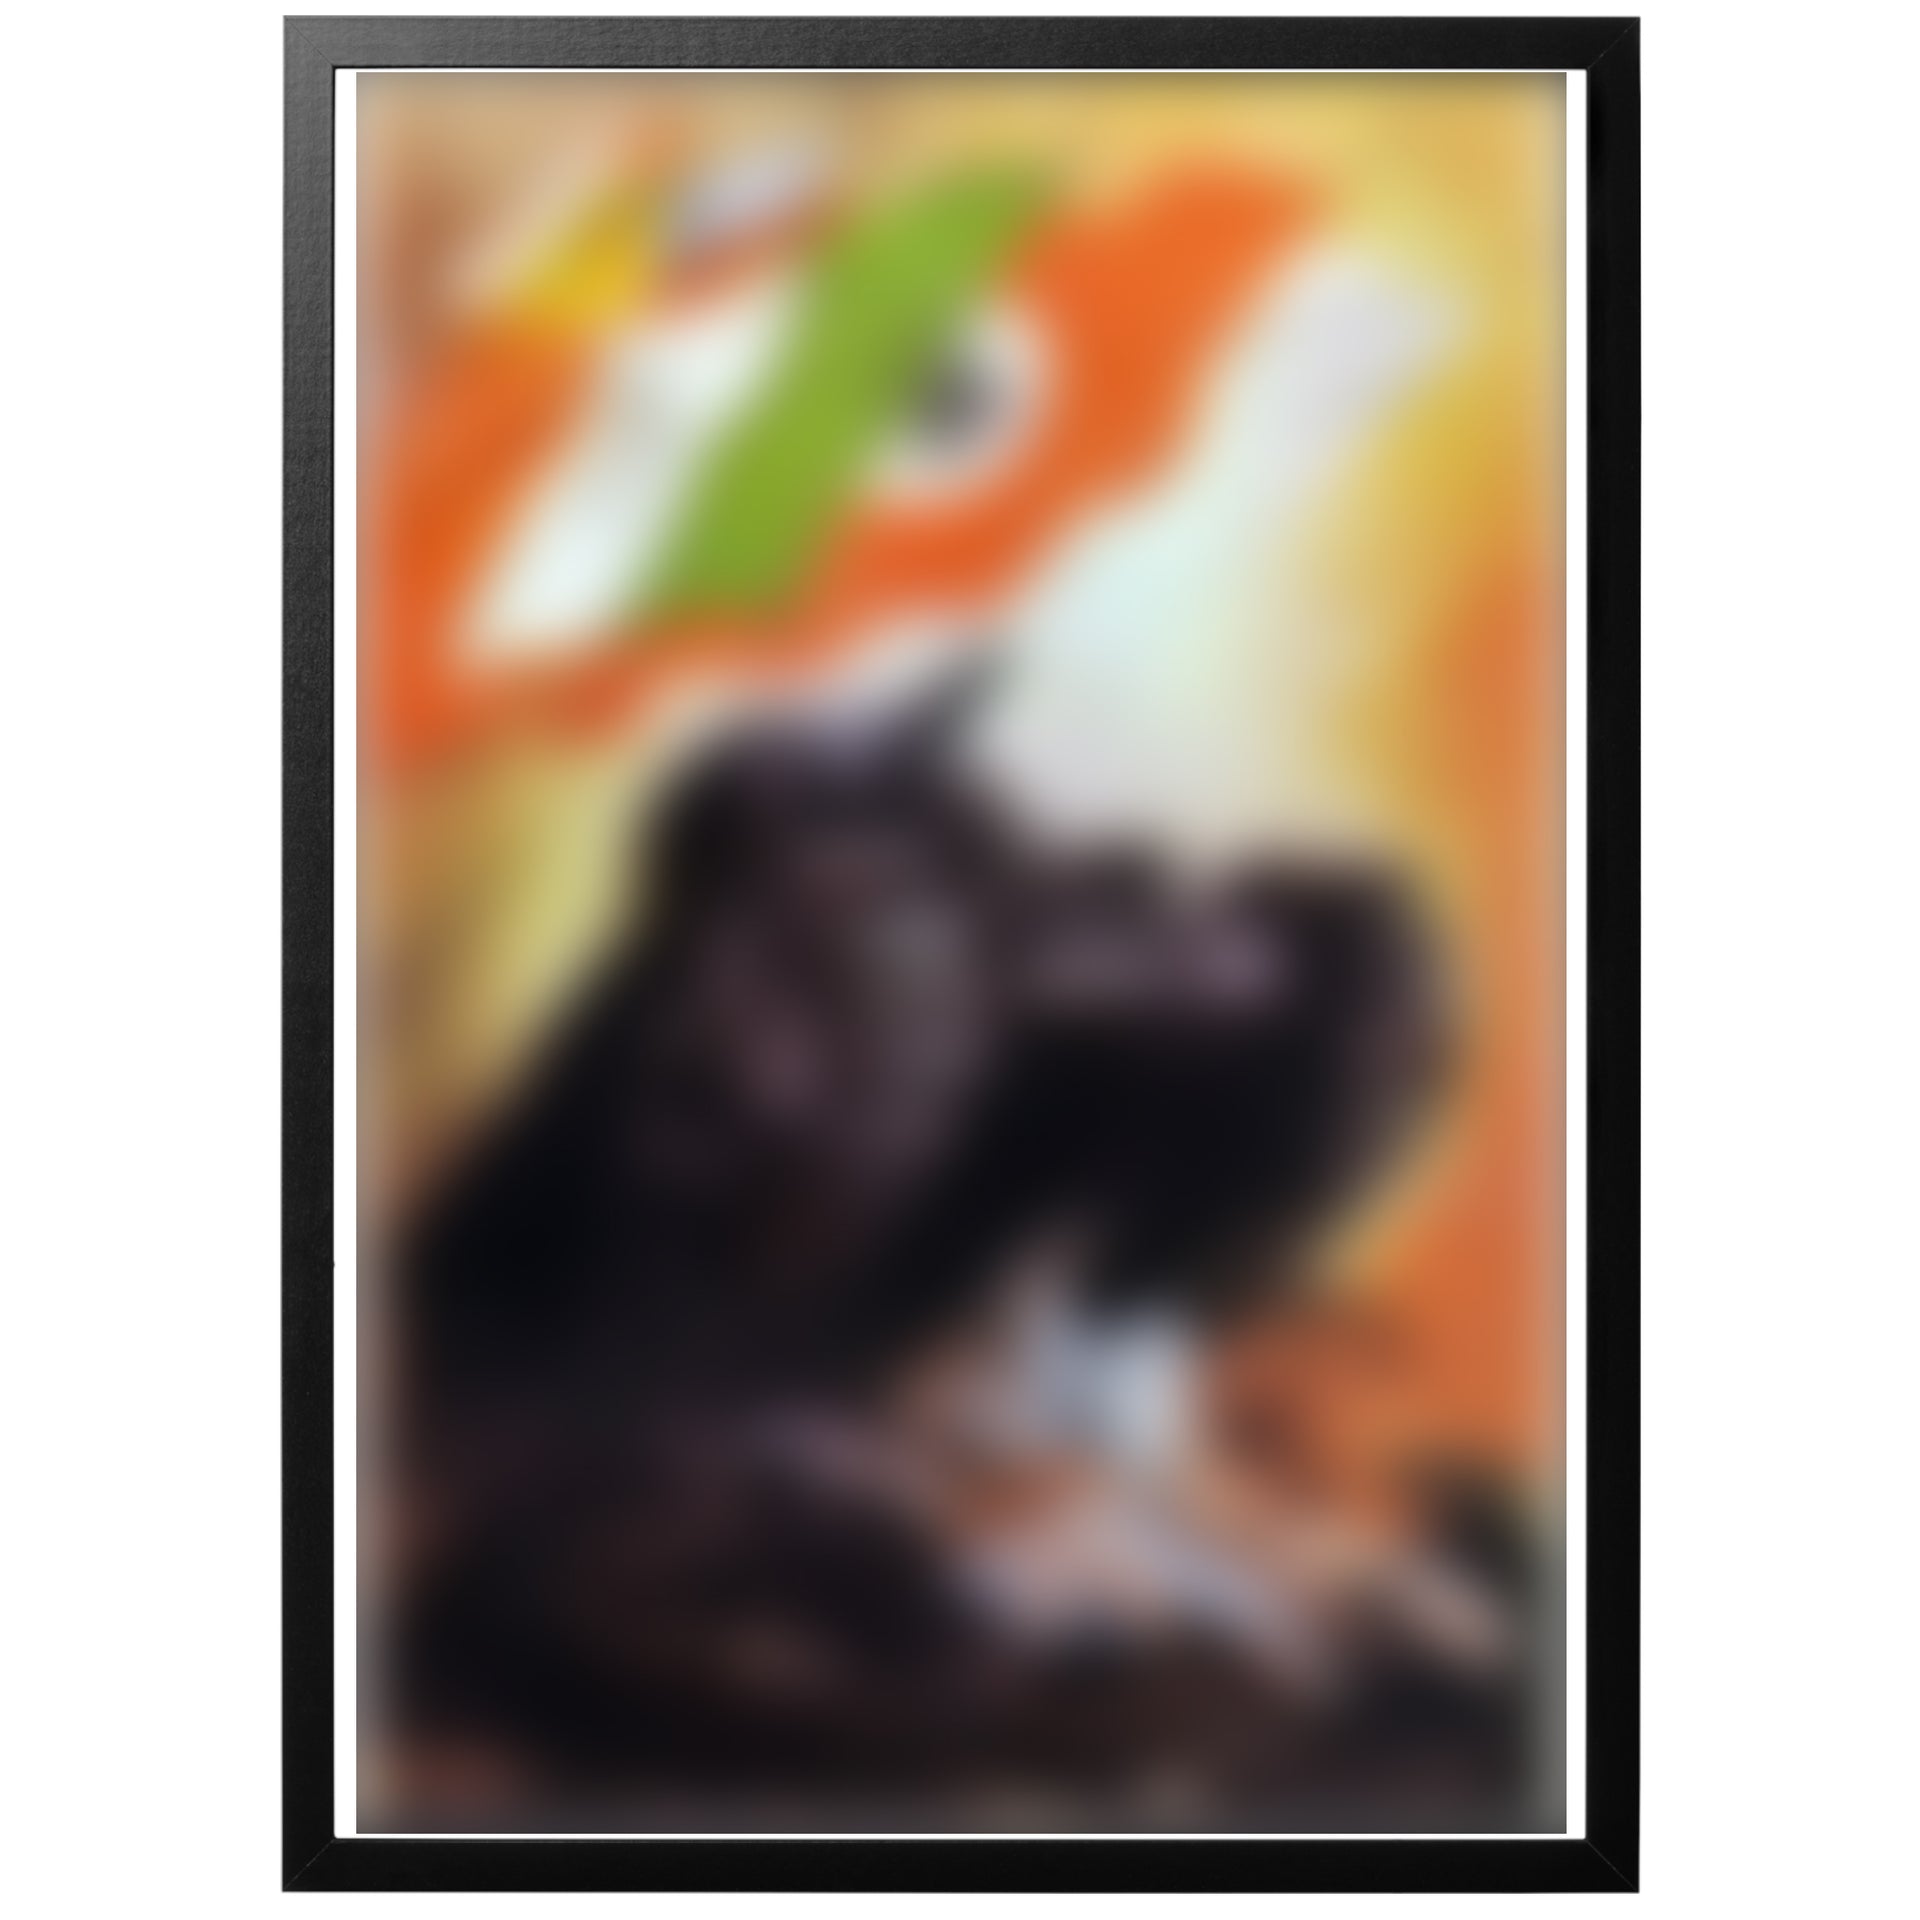 Serbatoio italiano Sv - "Italienskt pansar" Italiensk WWII affisch Årtal: Okänt Konstnär: Gino Boccasile Affischens historia En aggressiv krigsposter signerad Gino Boccasile 